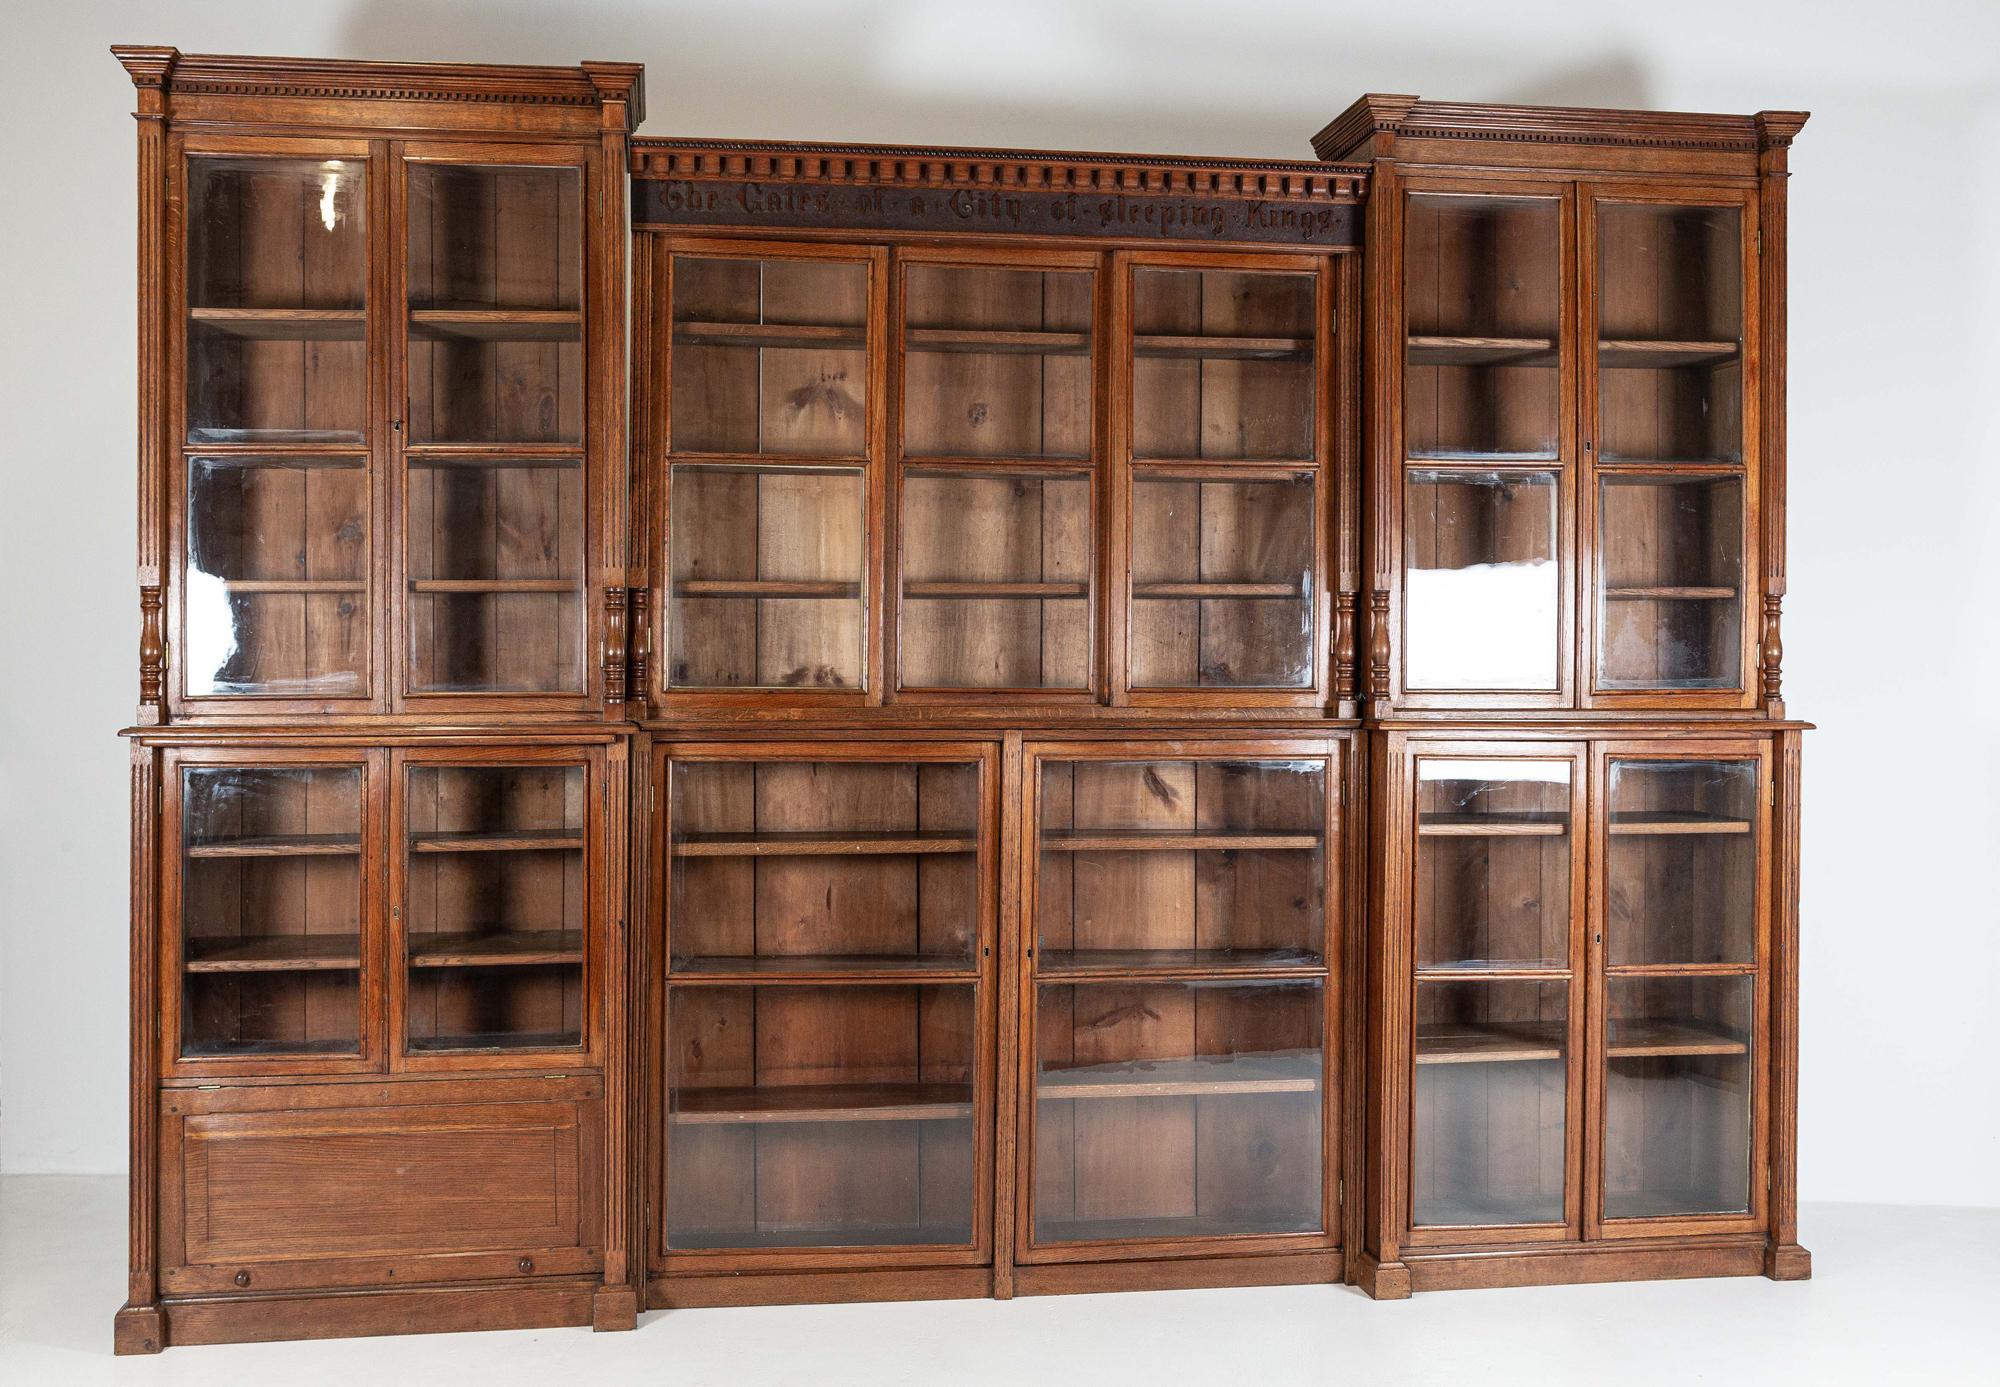 British 19thc Monumental English Architectural Glazed Oak Bookcase